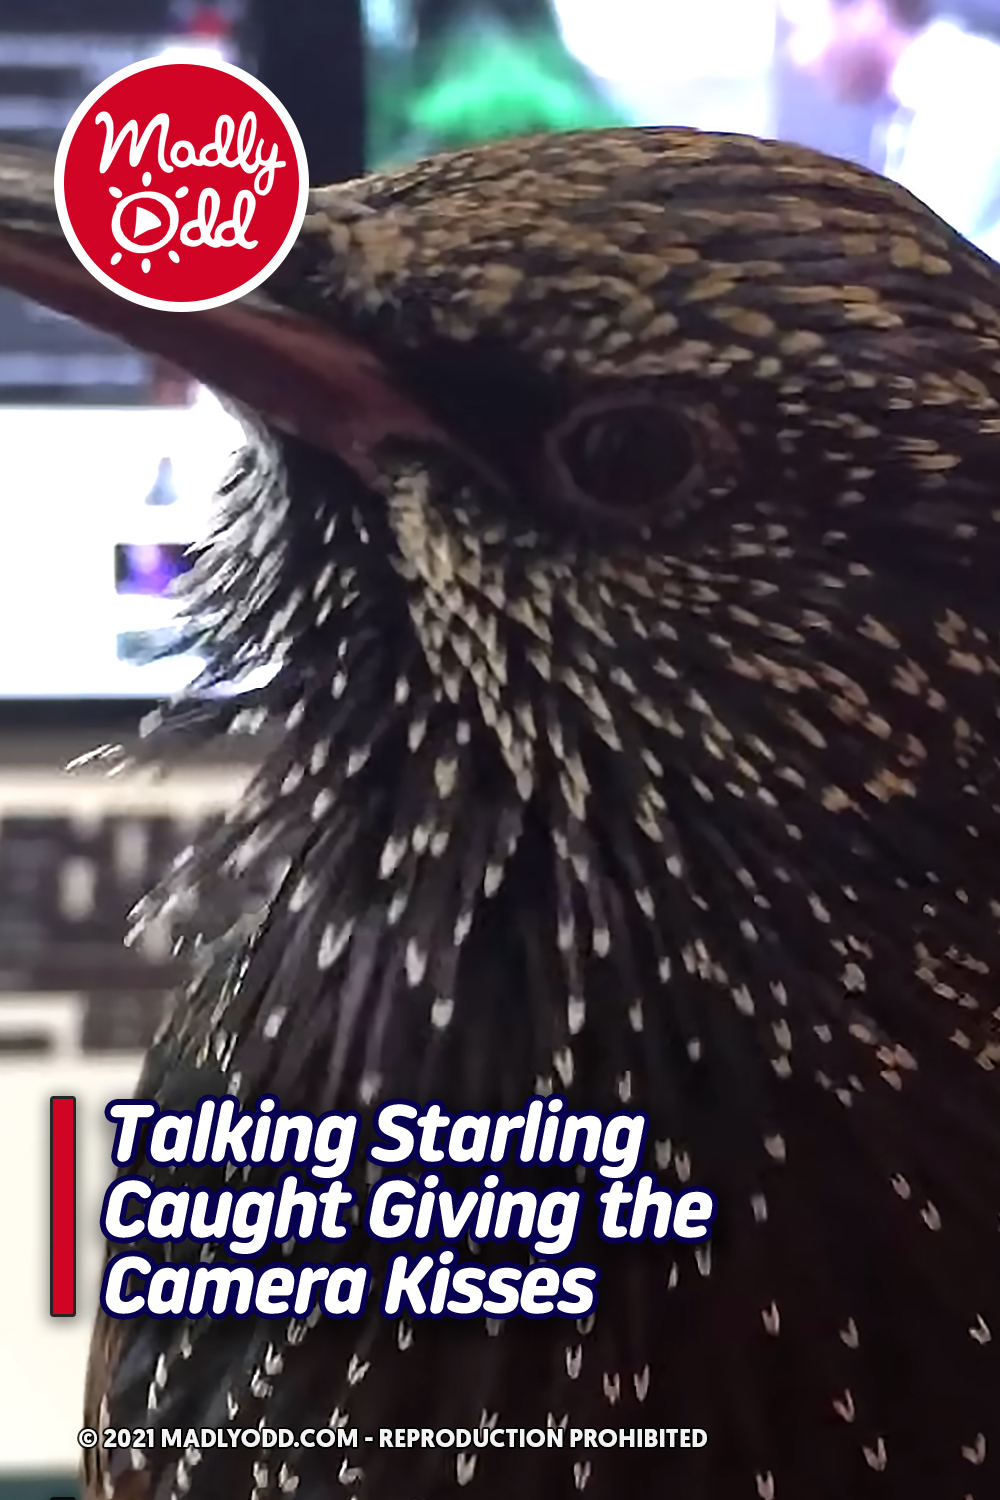 Talking Starling Caught Giving the Camera Kisses